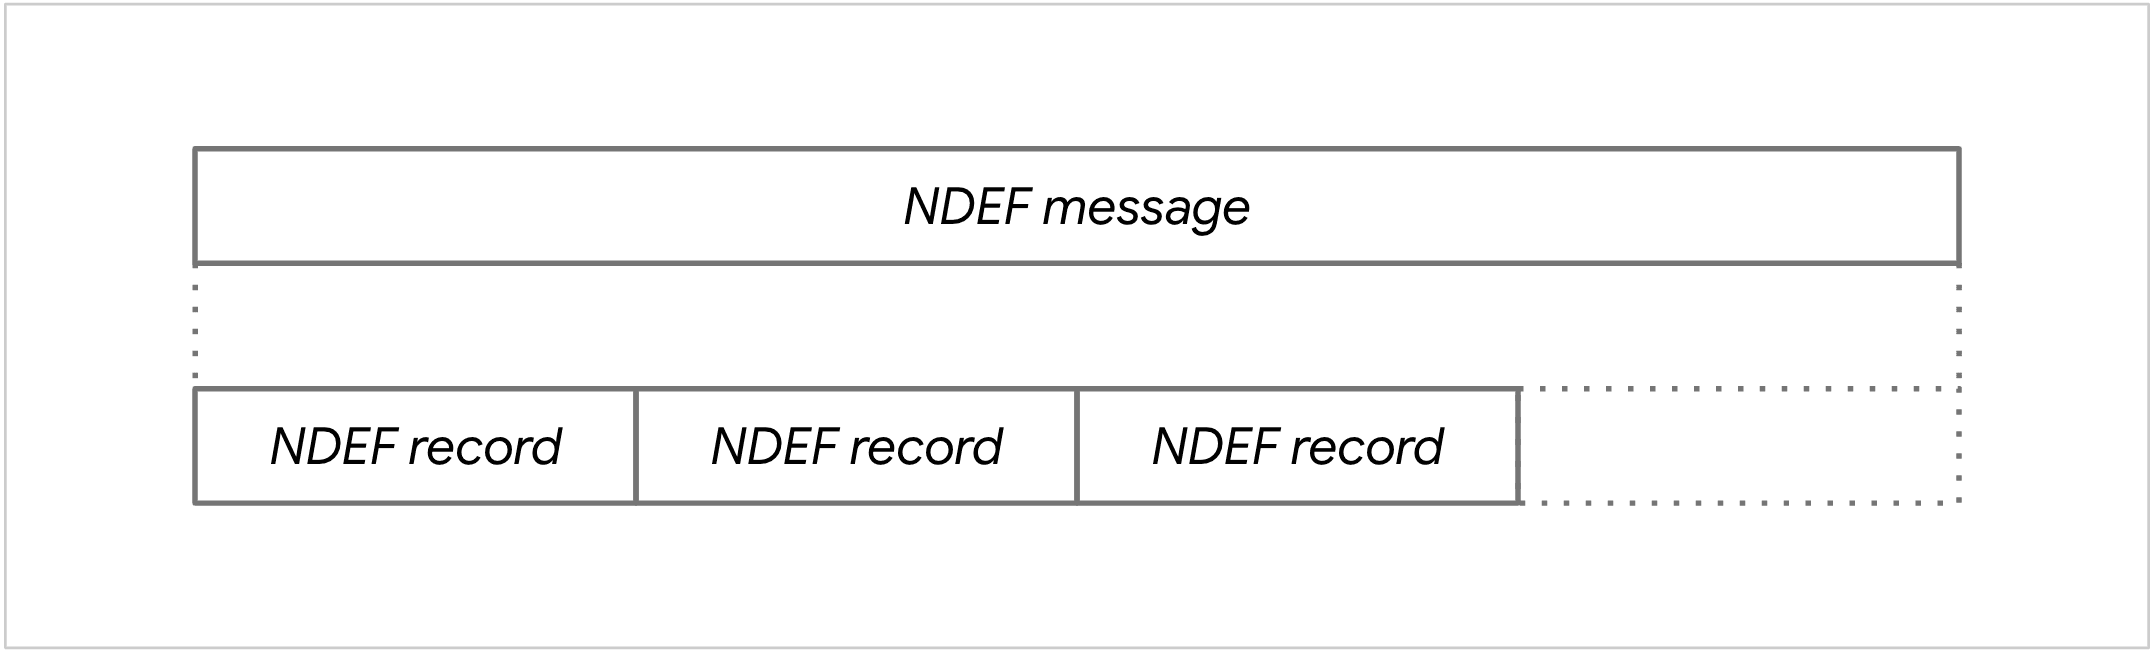 نمودار یک پیام NDEF